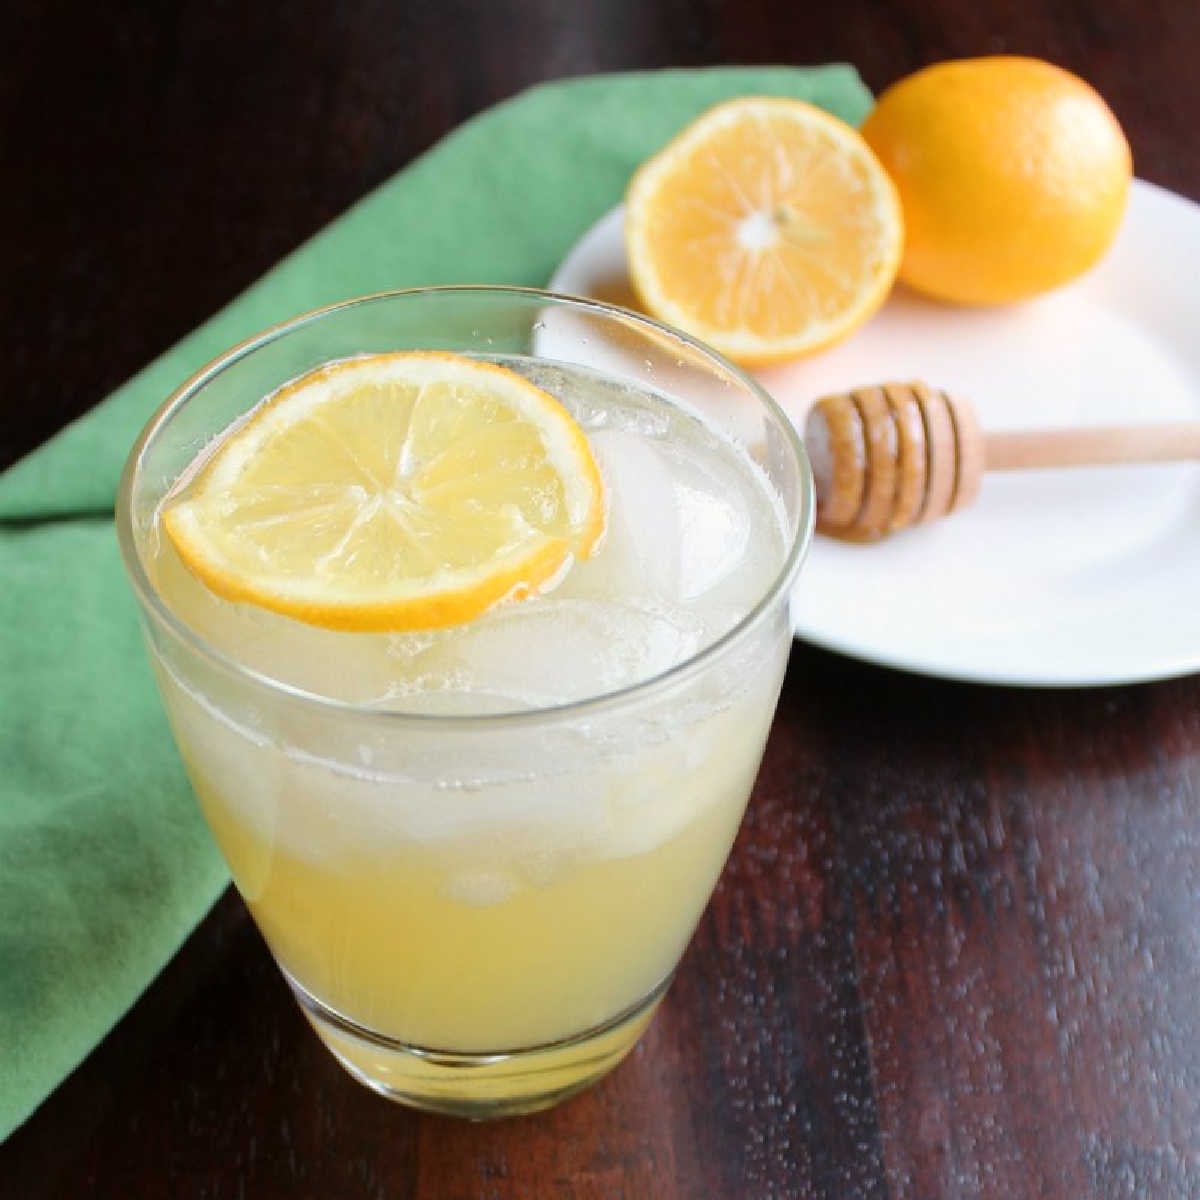 glass of honey lemonade on ice with floating lemon slice with honey drizzler and additional fresh lemons in background.